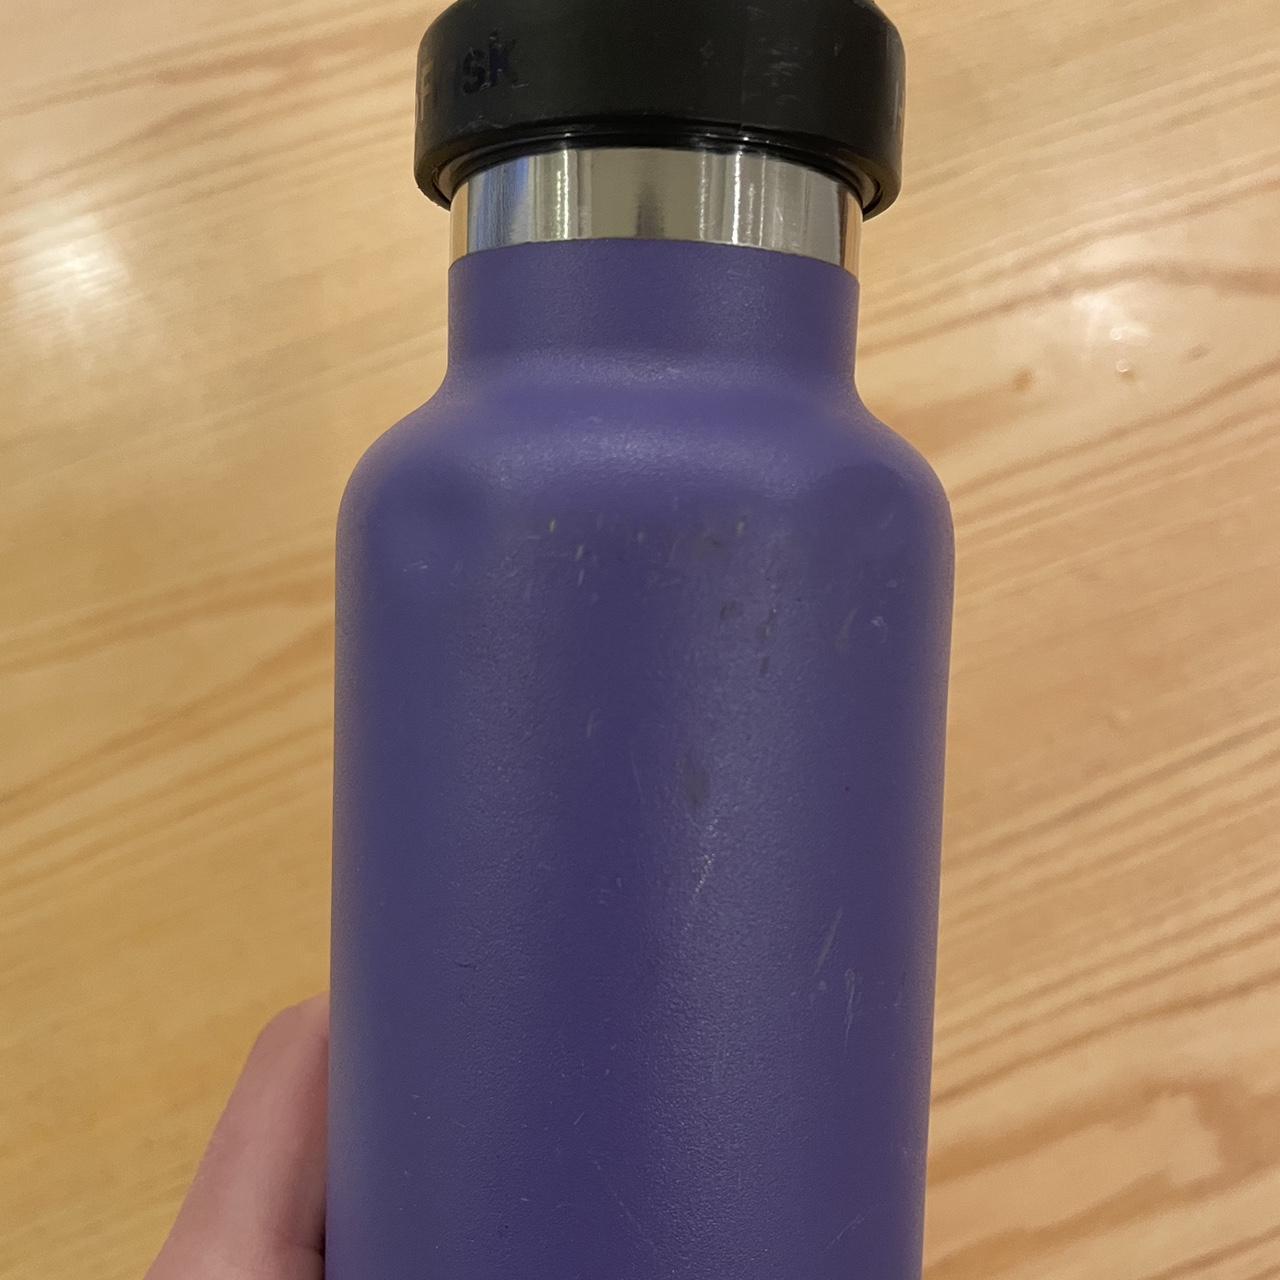 Silver 24 oz hydroflask with blue bottom - Depop